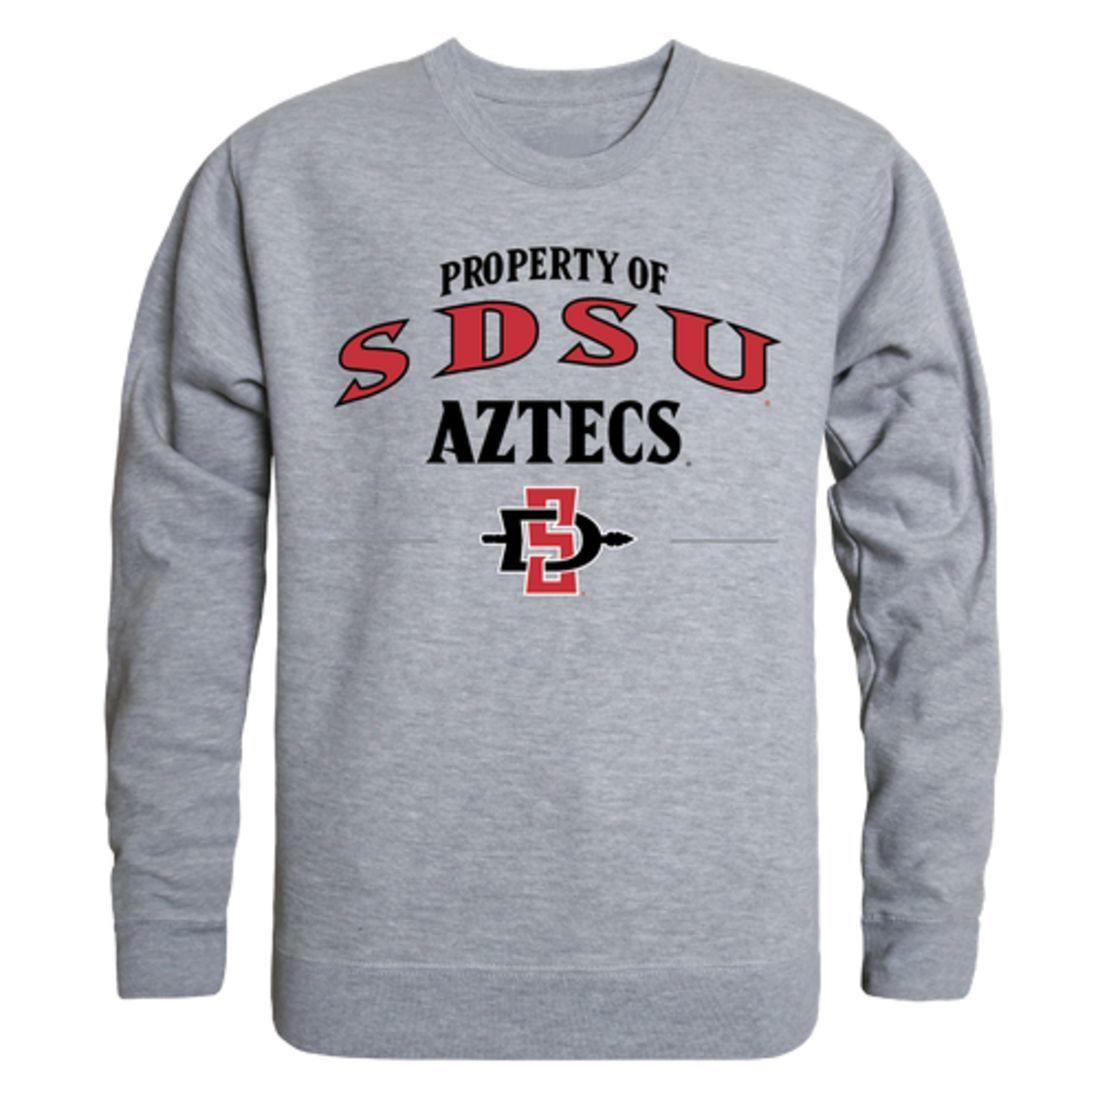 SDSU San Diego State University Aztecs Property Crewneck Pullover Sweatshirt Sweater Heather Grey-Campus-Wardrobe